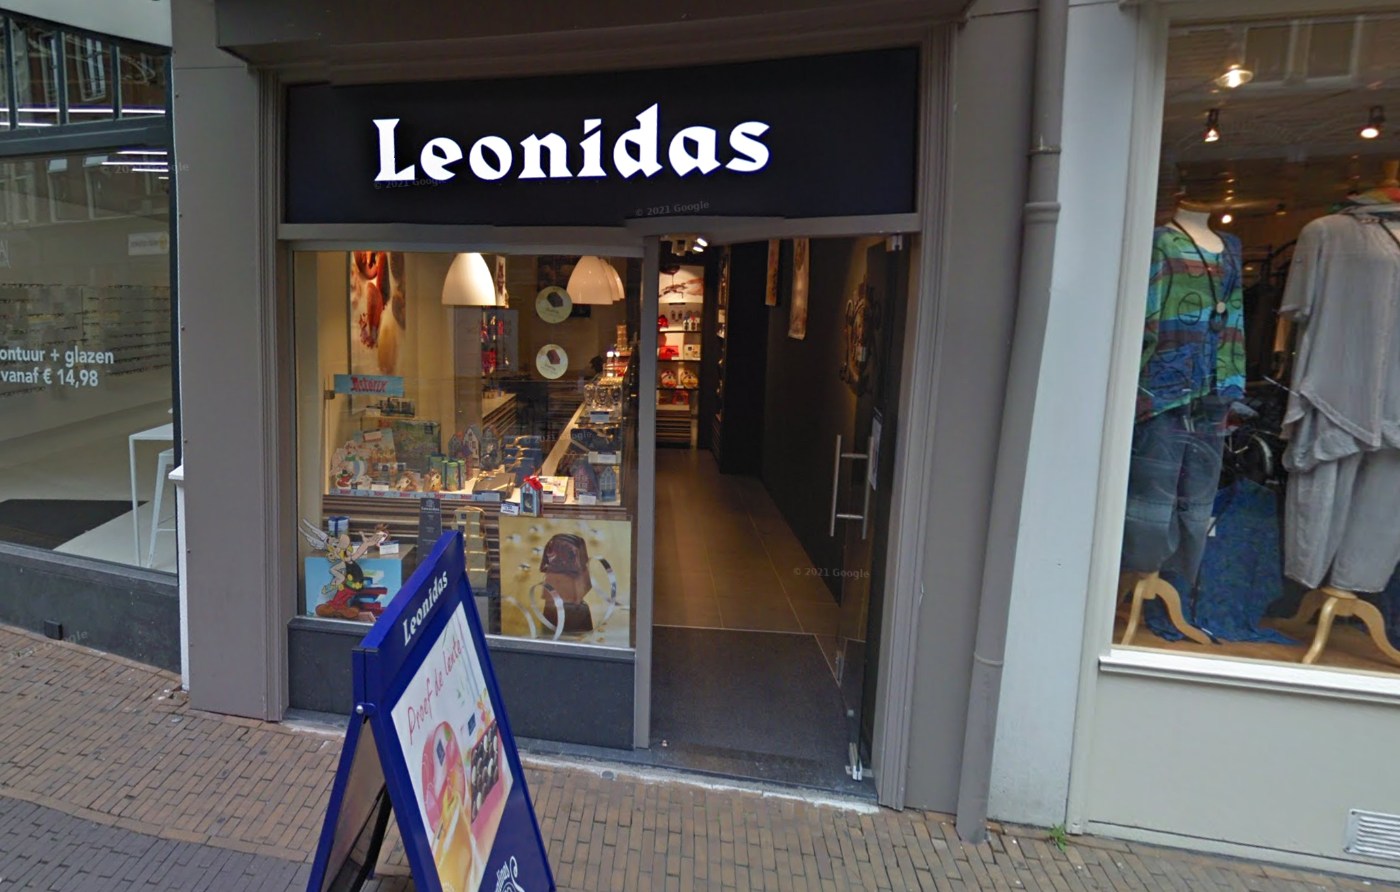 leonidas chocolade winkel utrecht